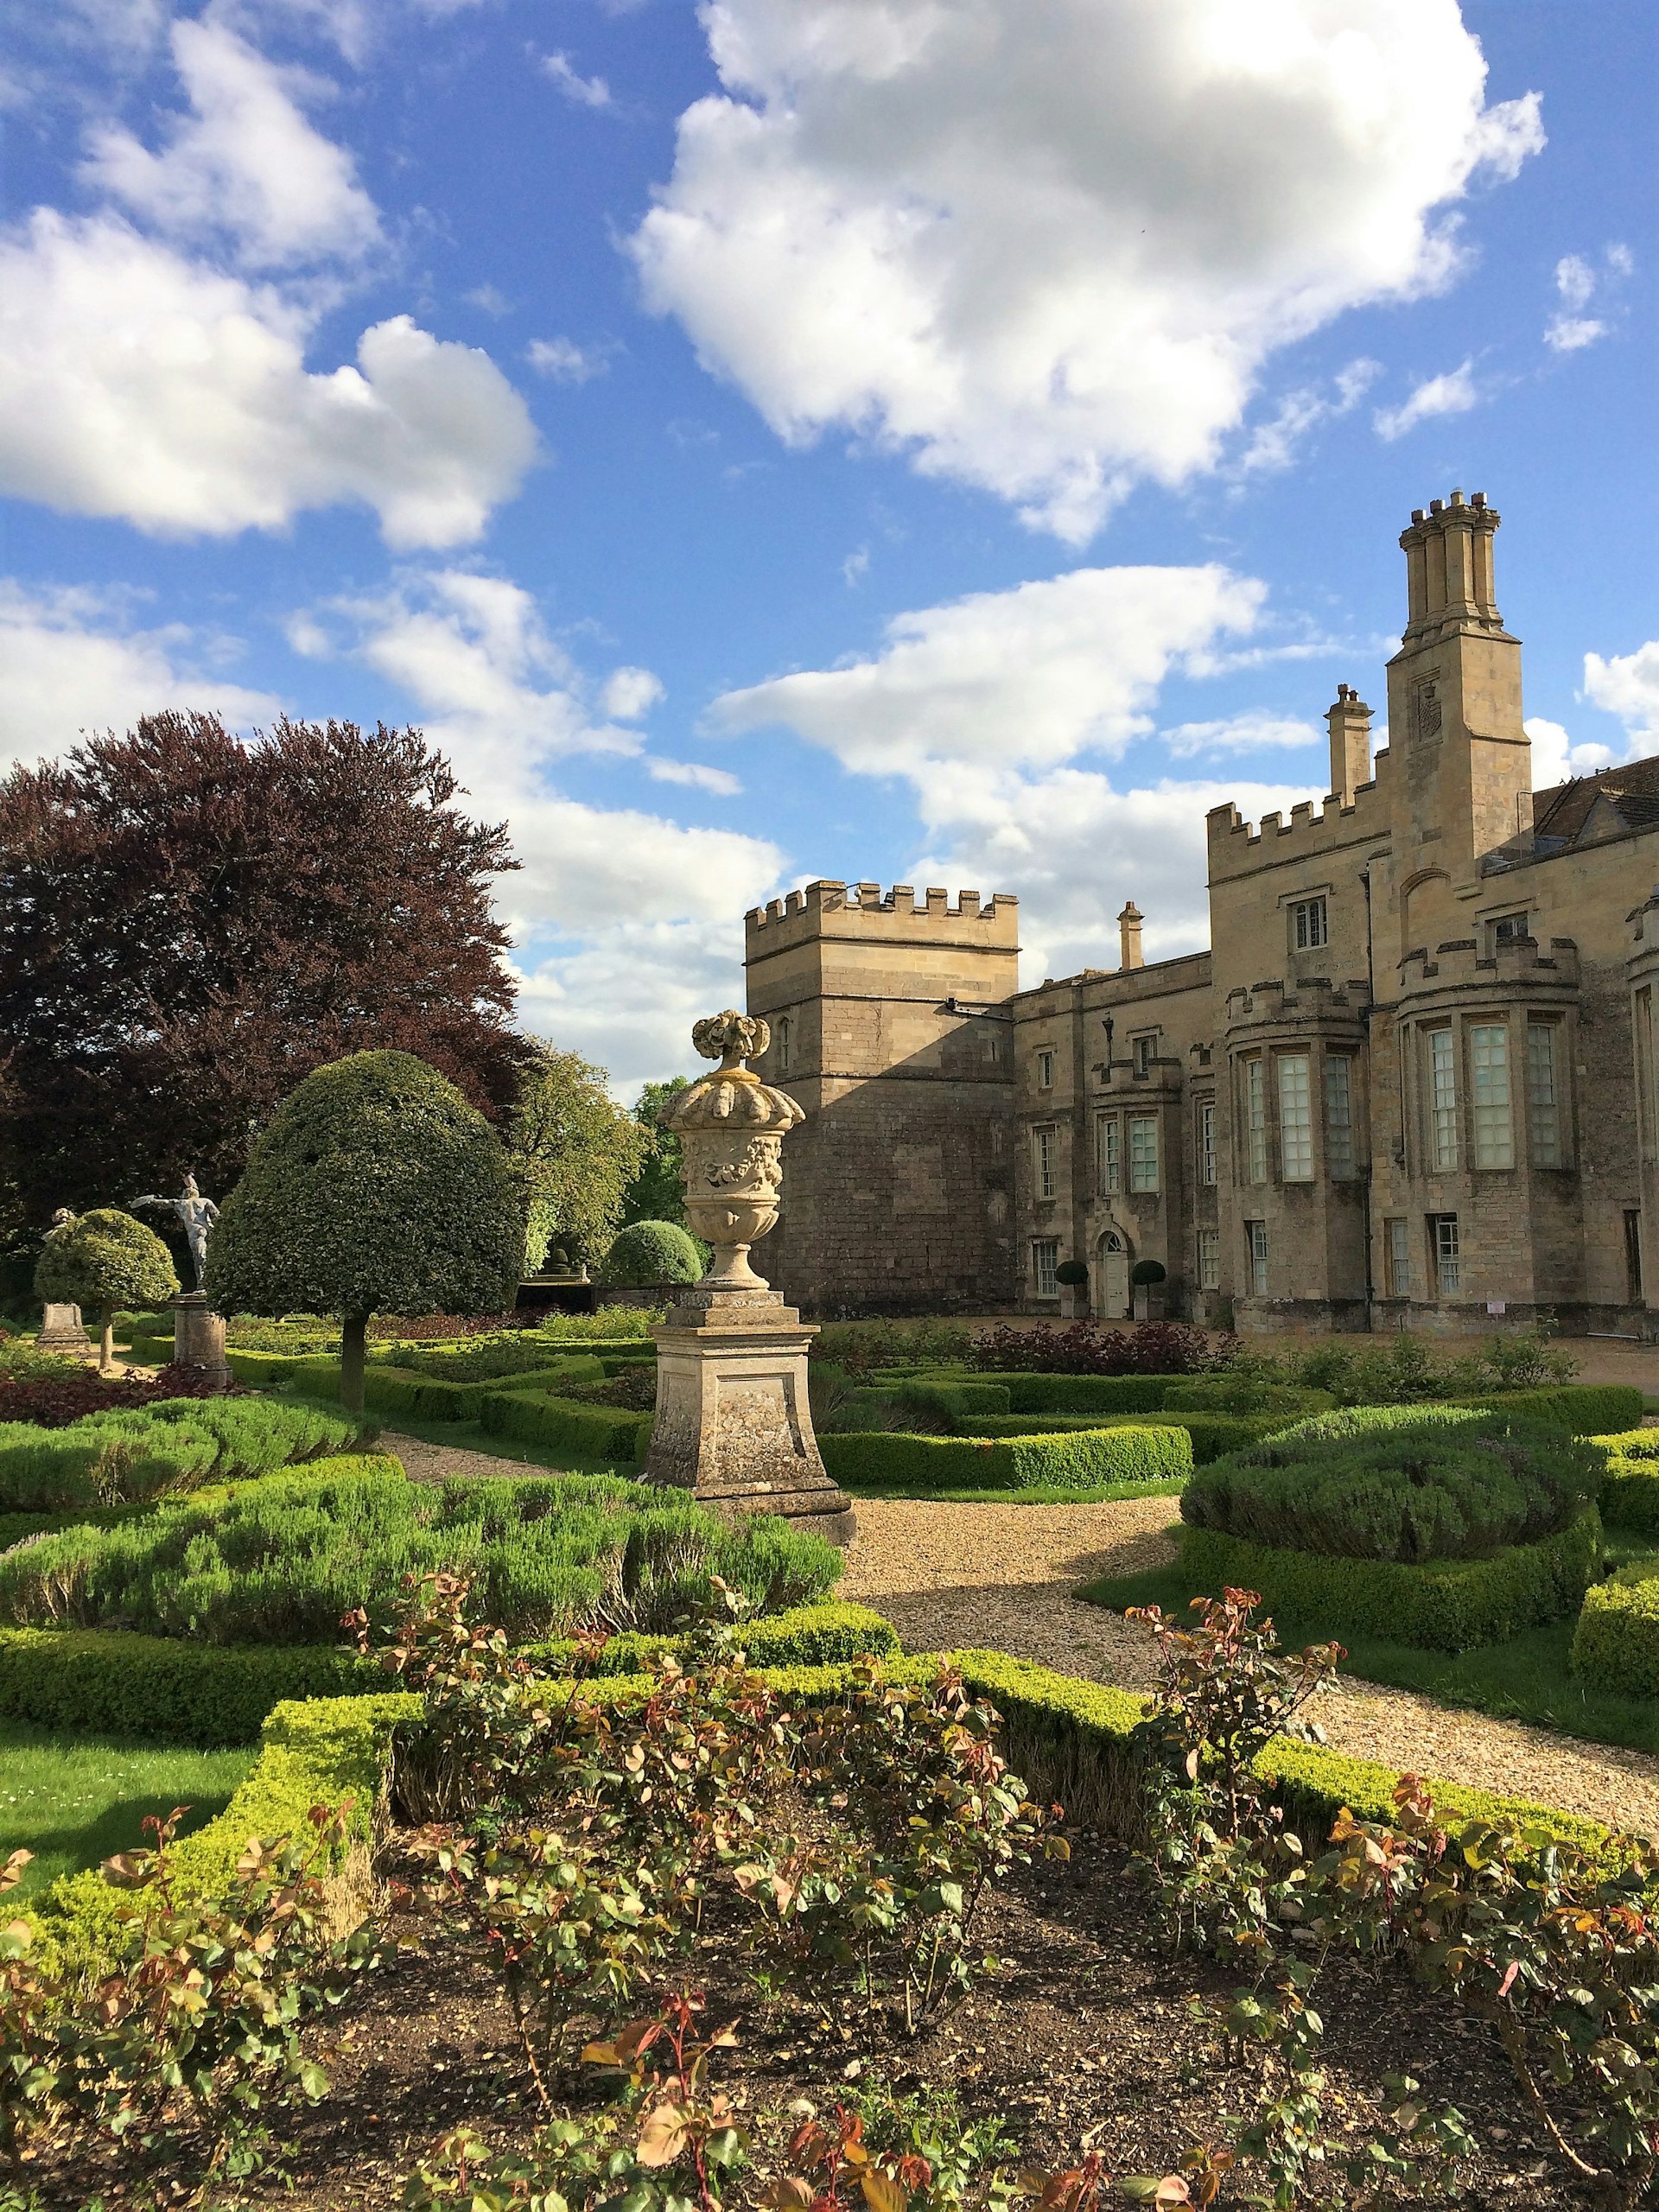 Tudor grandeur and gorgeous gardens combine at Grimsthorpe Castle © Clifton Wilkinson / Lonely Planet